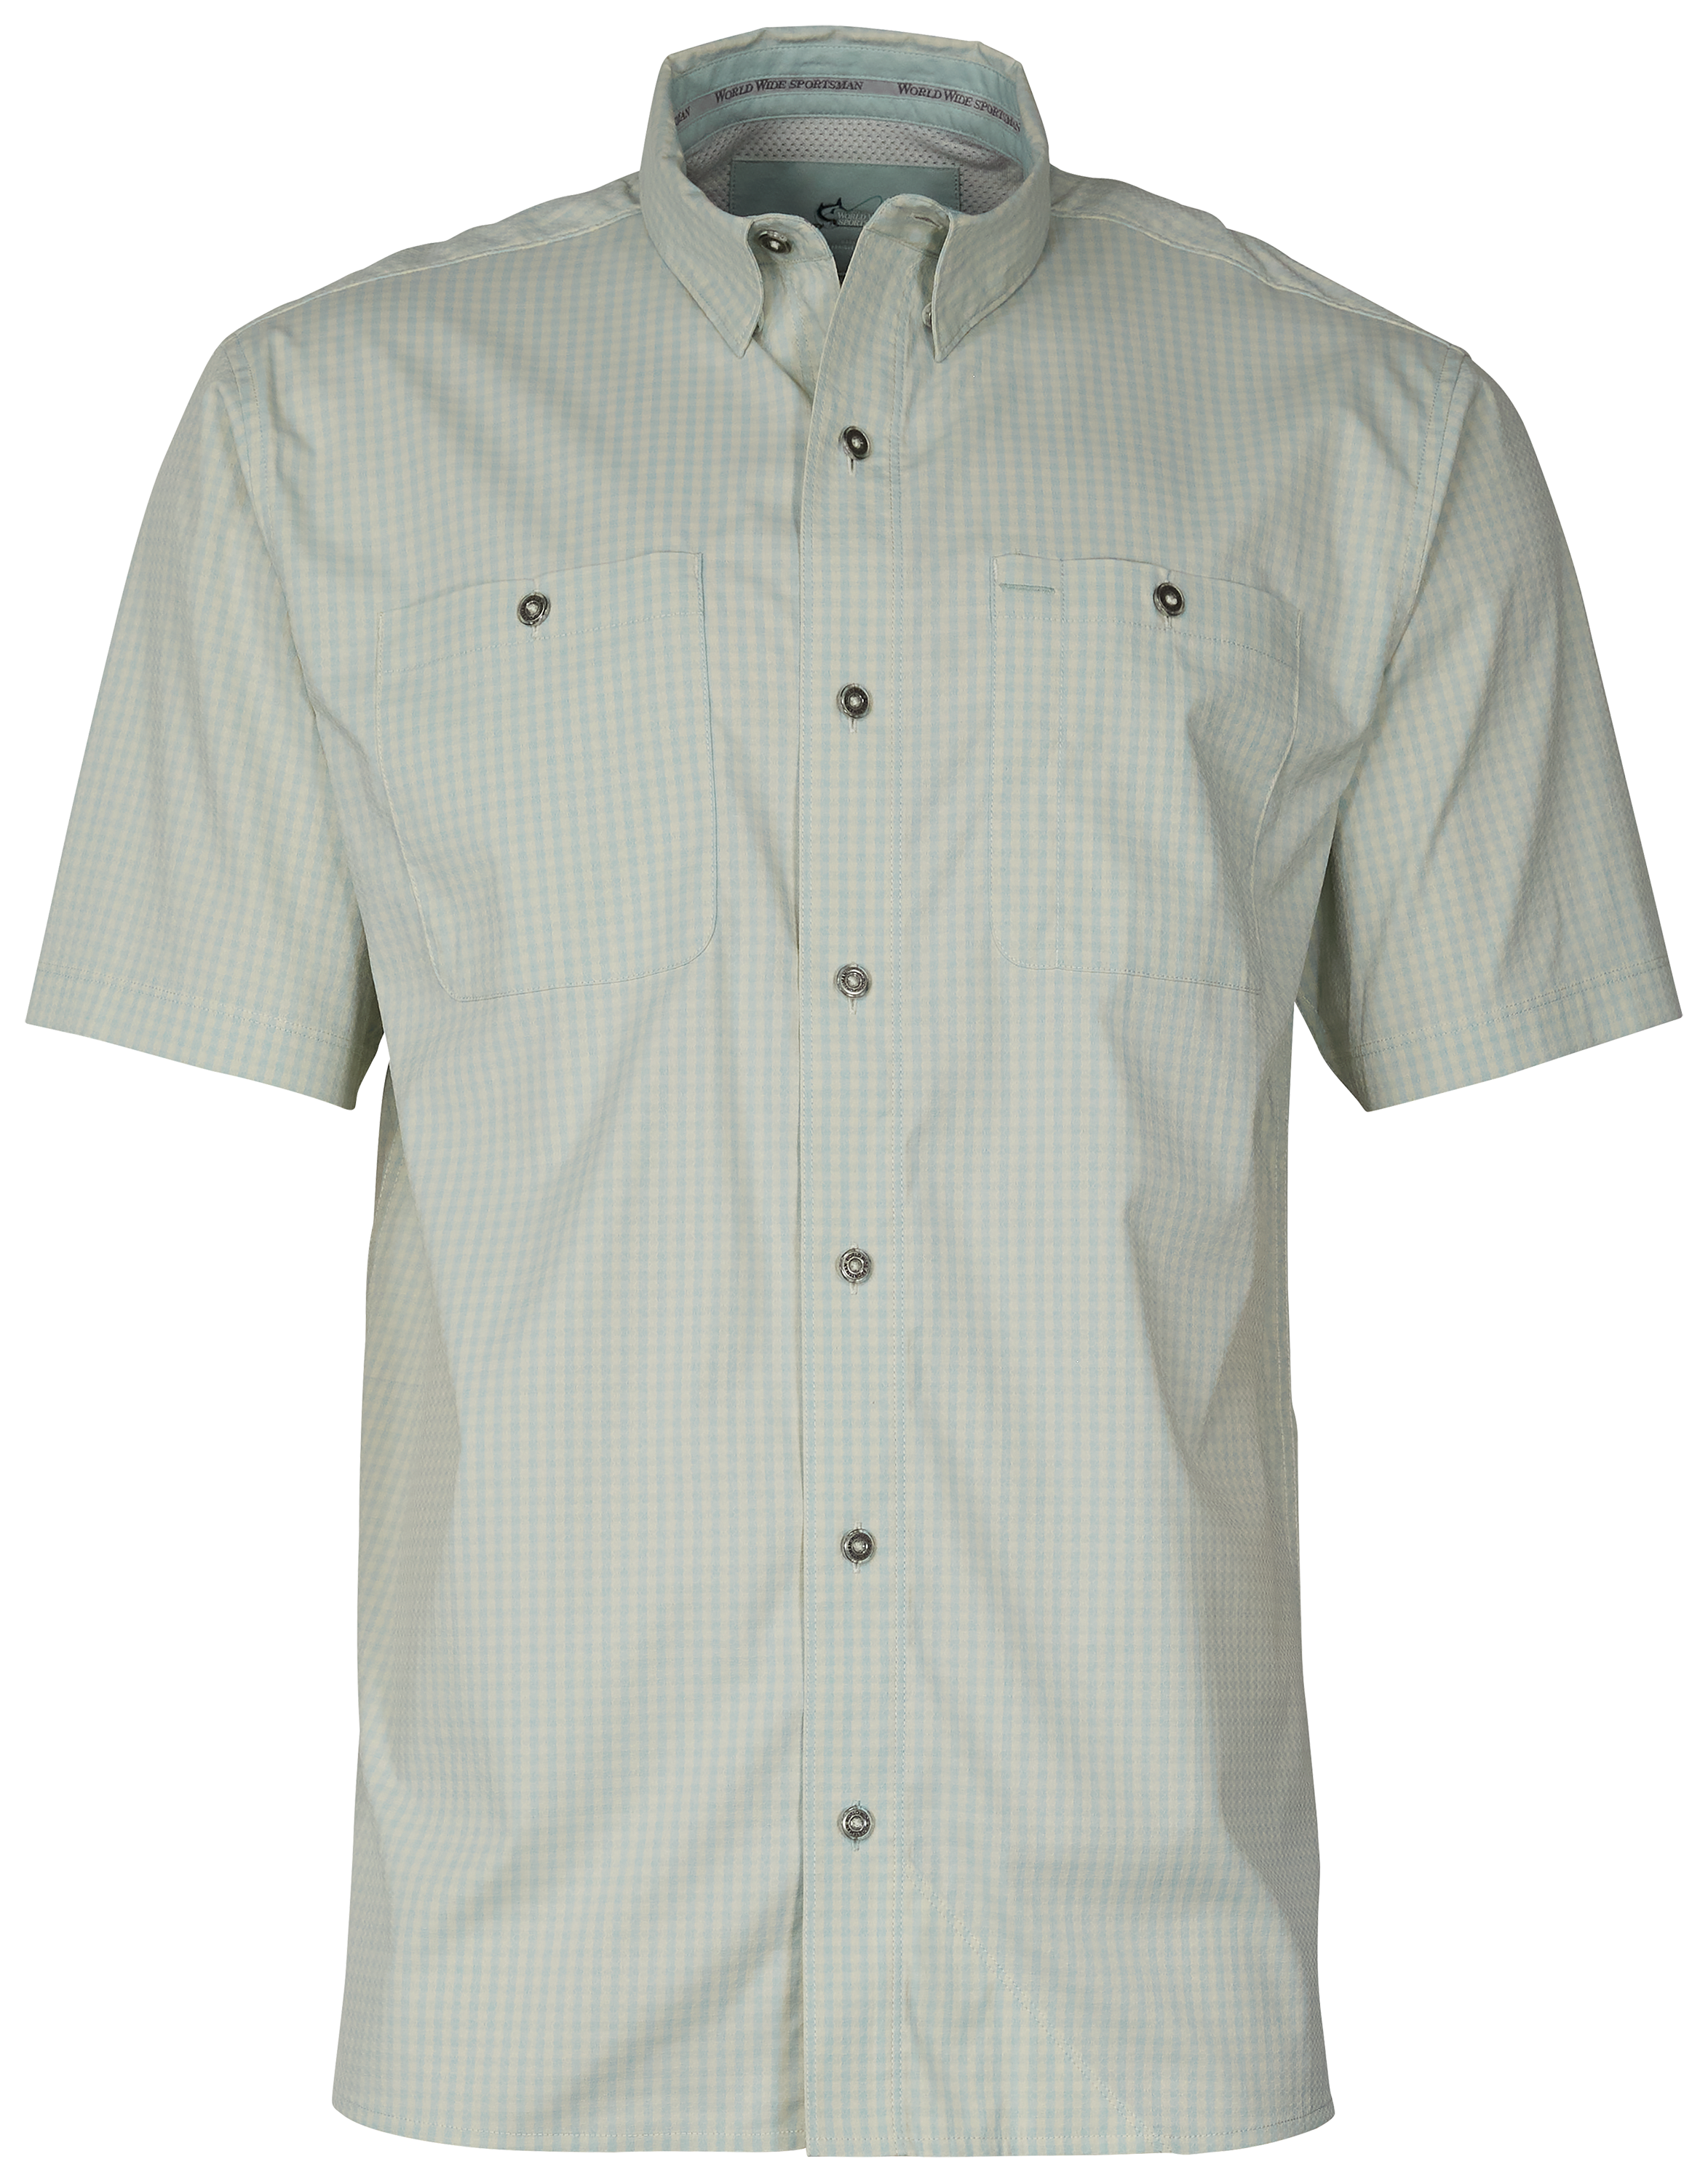 World Wide Sportsman Ultimate Angler Plaid Short-Sleeve Shirt for Men - Harbor Gray Gingham - 2XL